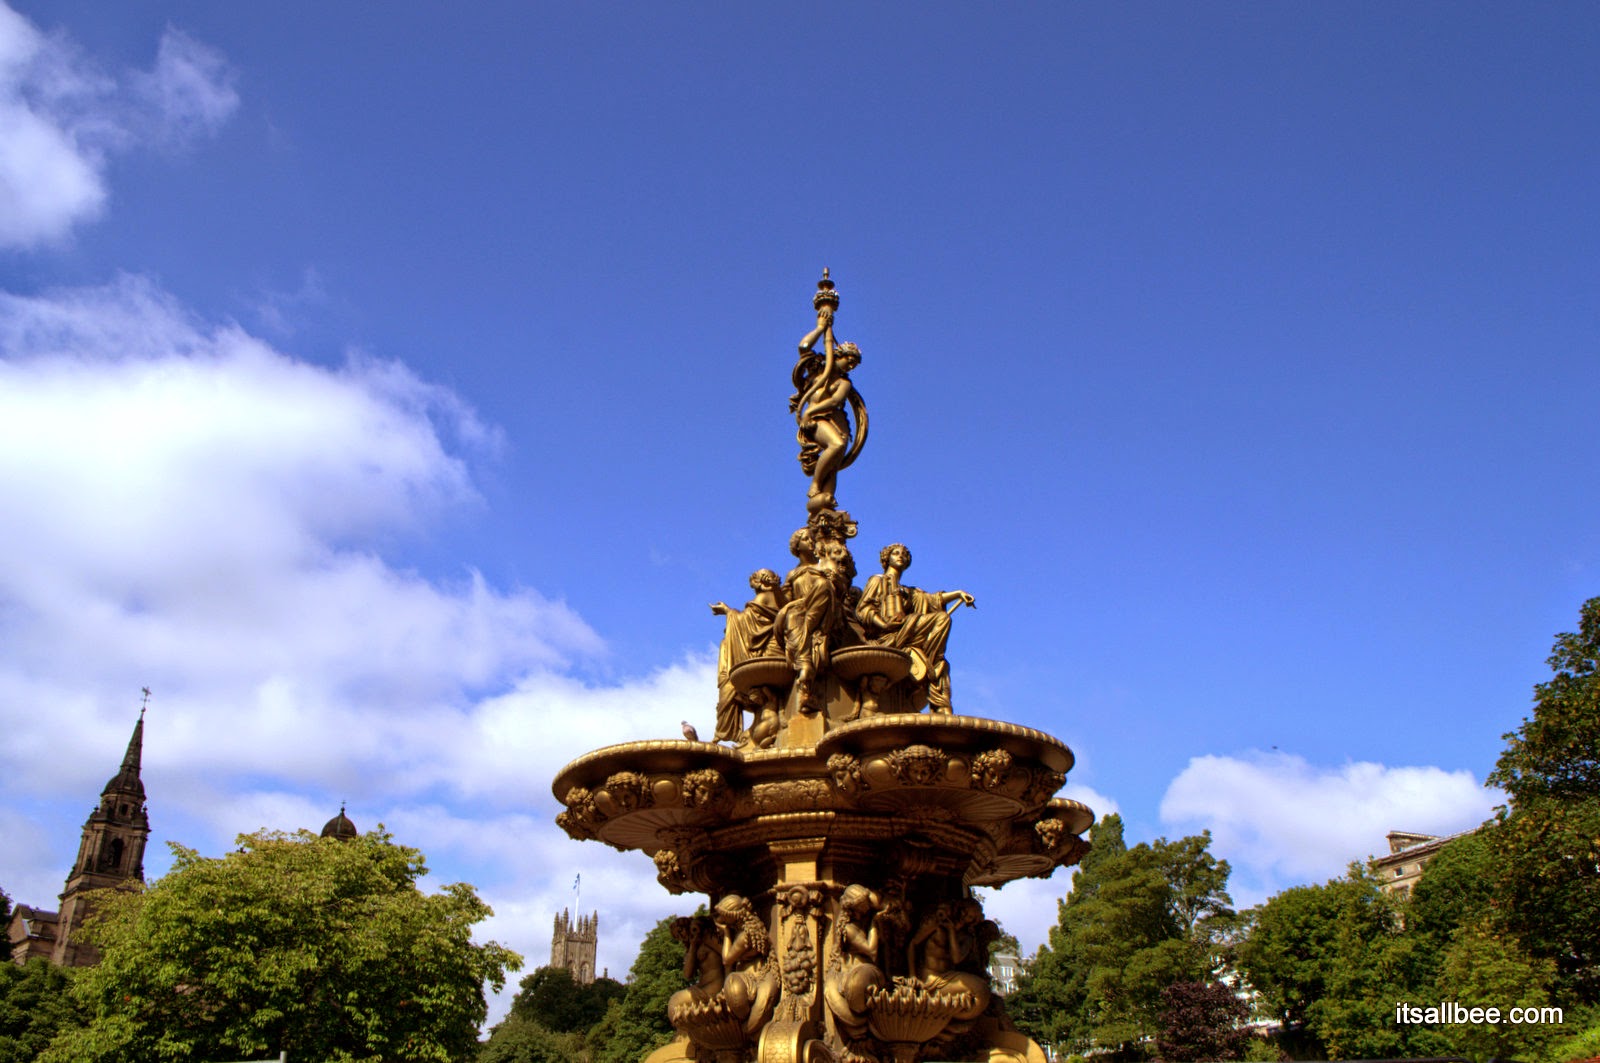 princess street gardens - Edinburgh Castle Ross Fountain